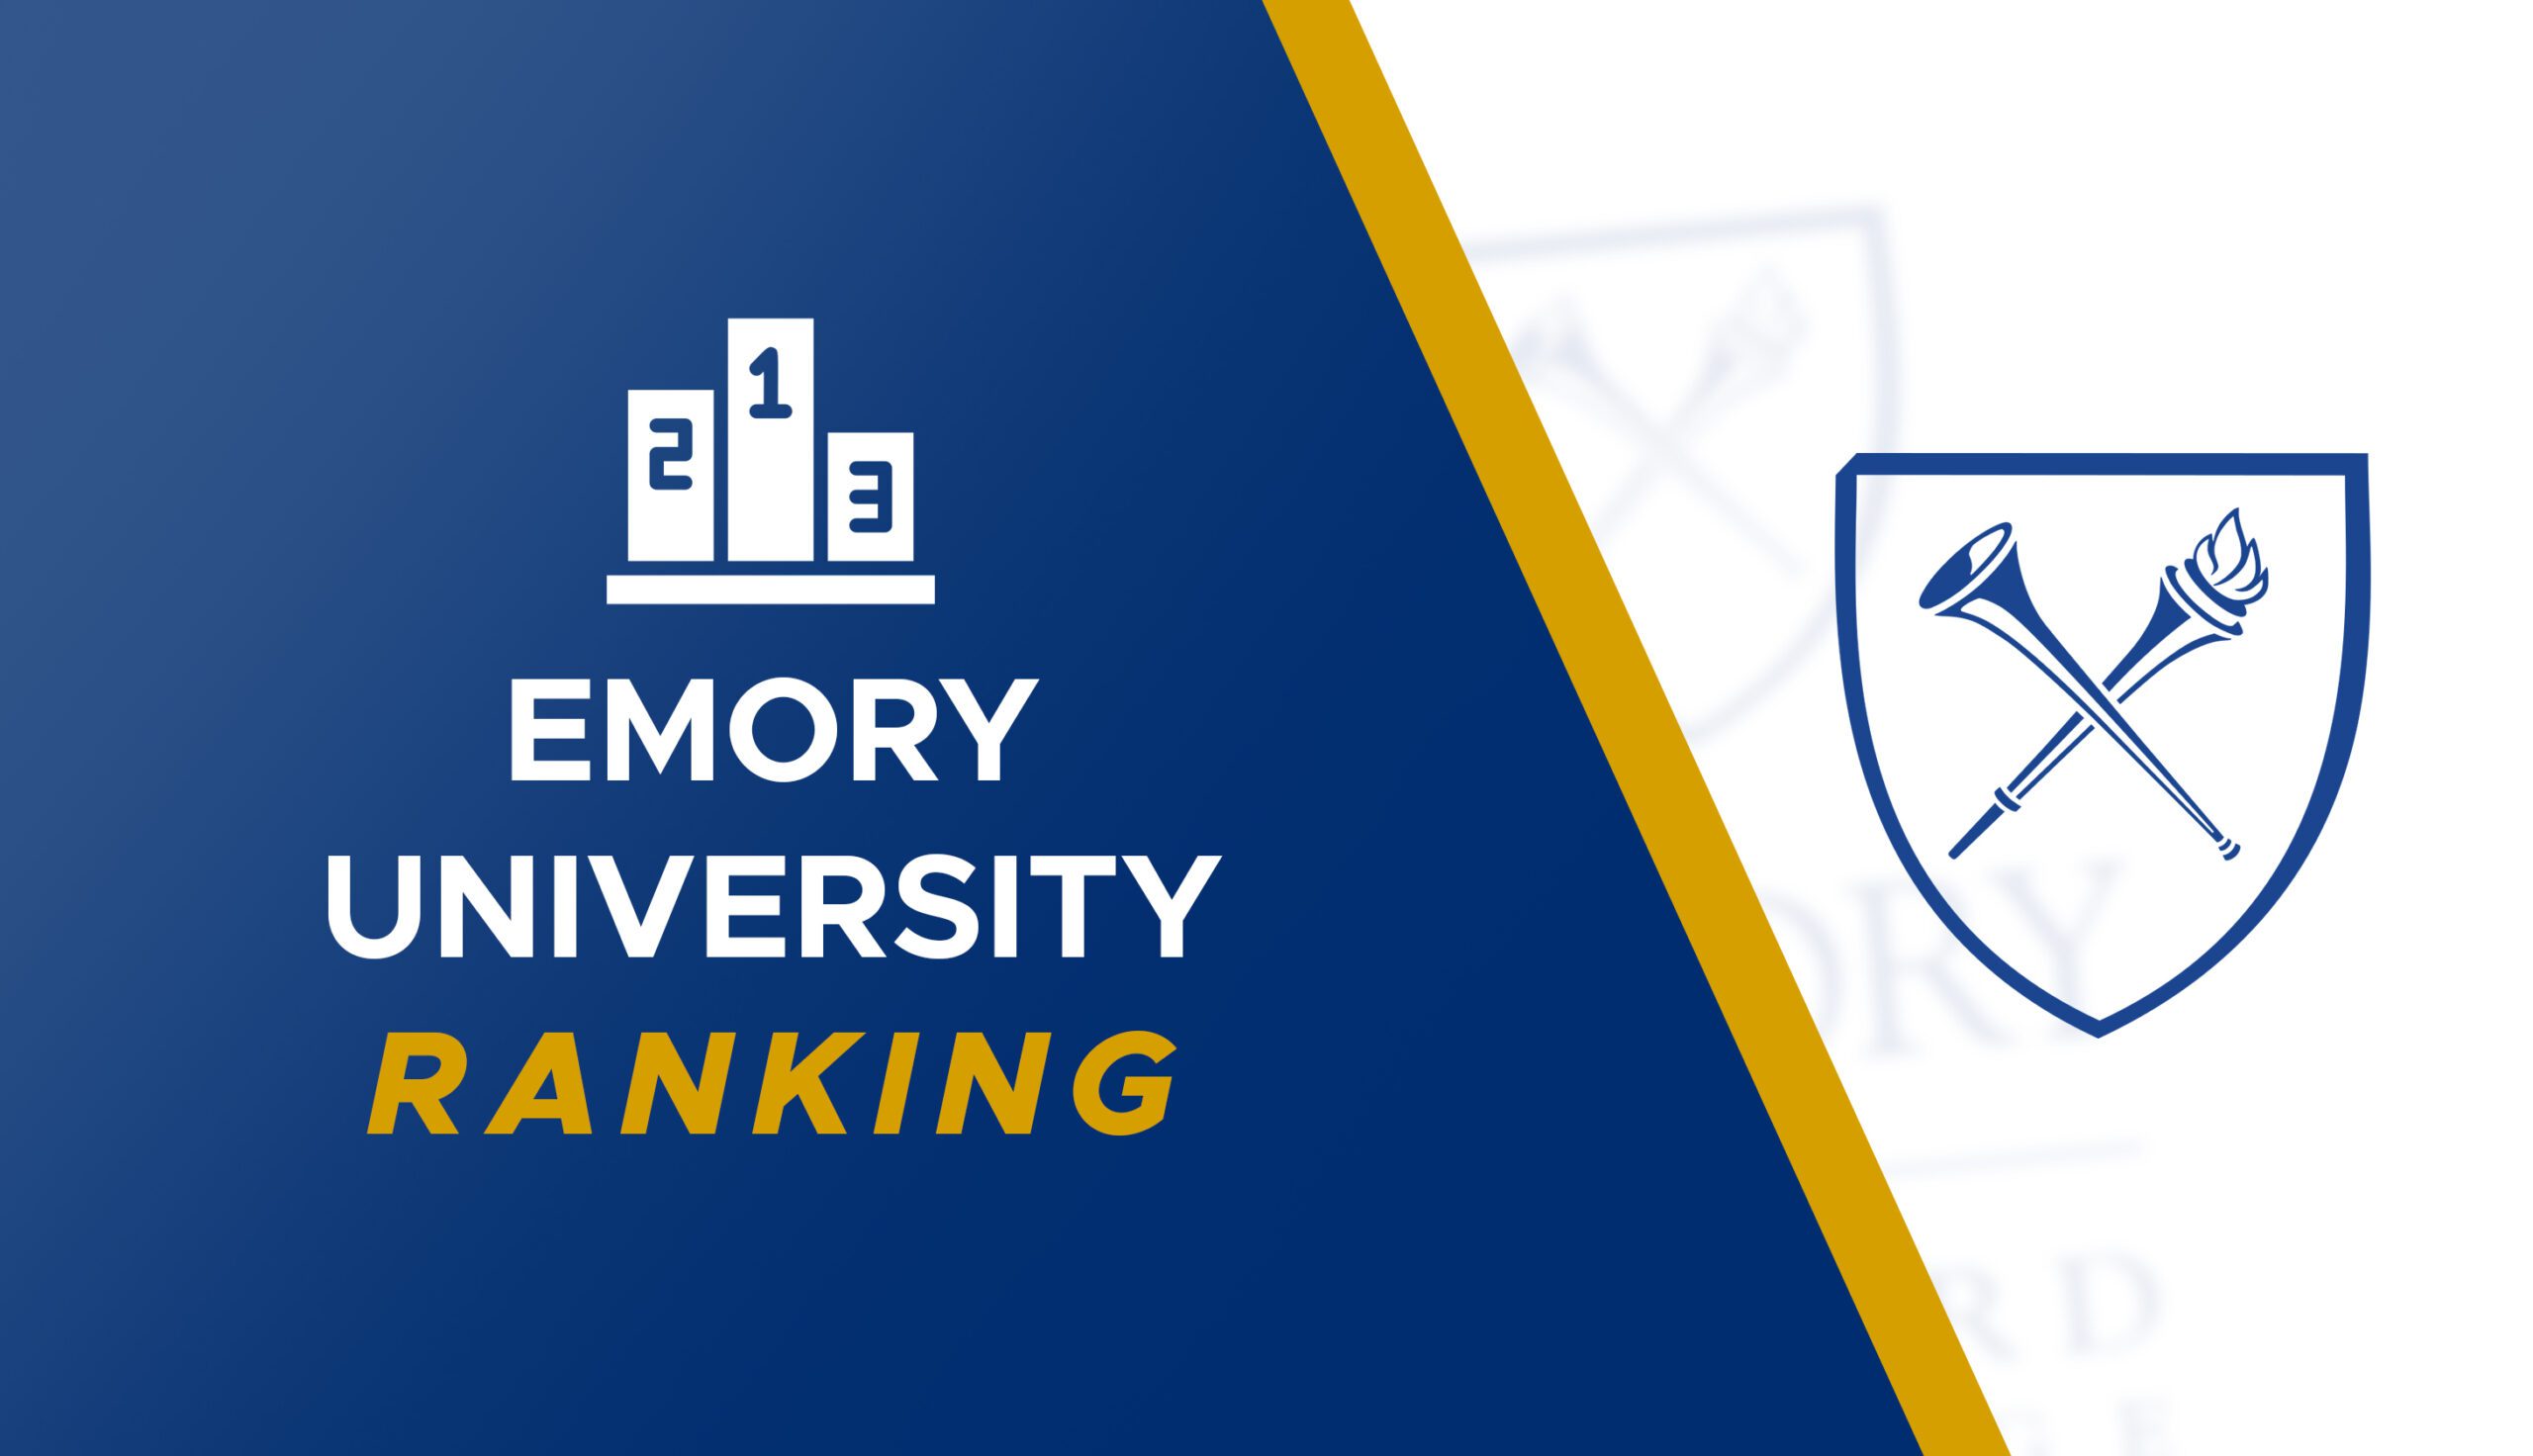 Emory University Ranking & Emory Ranking - Latest Info